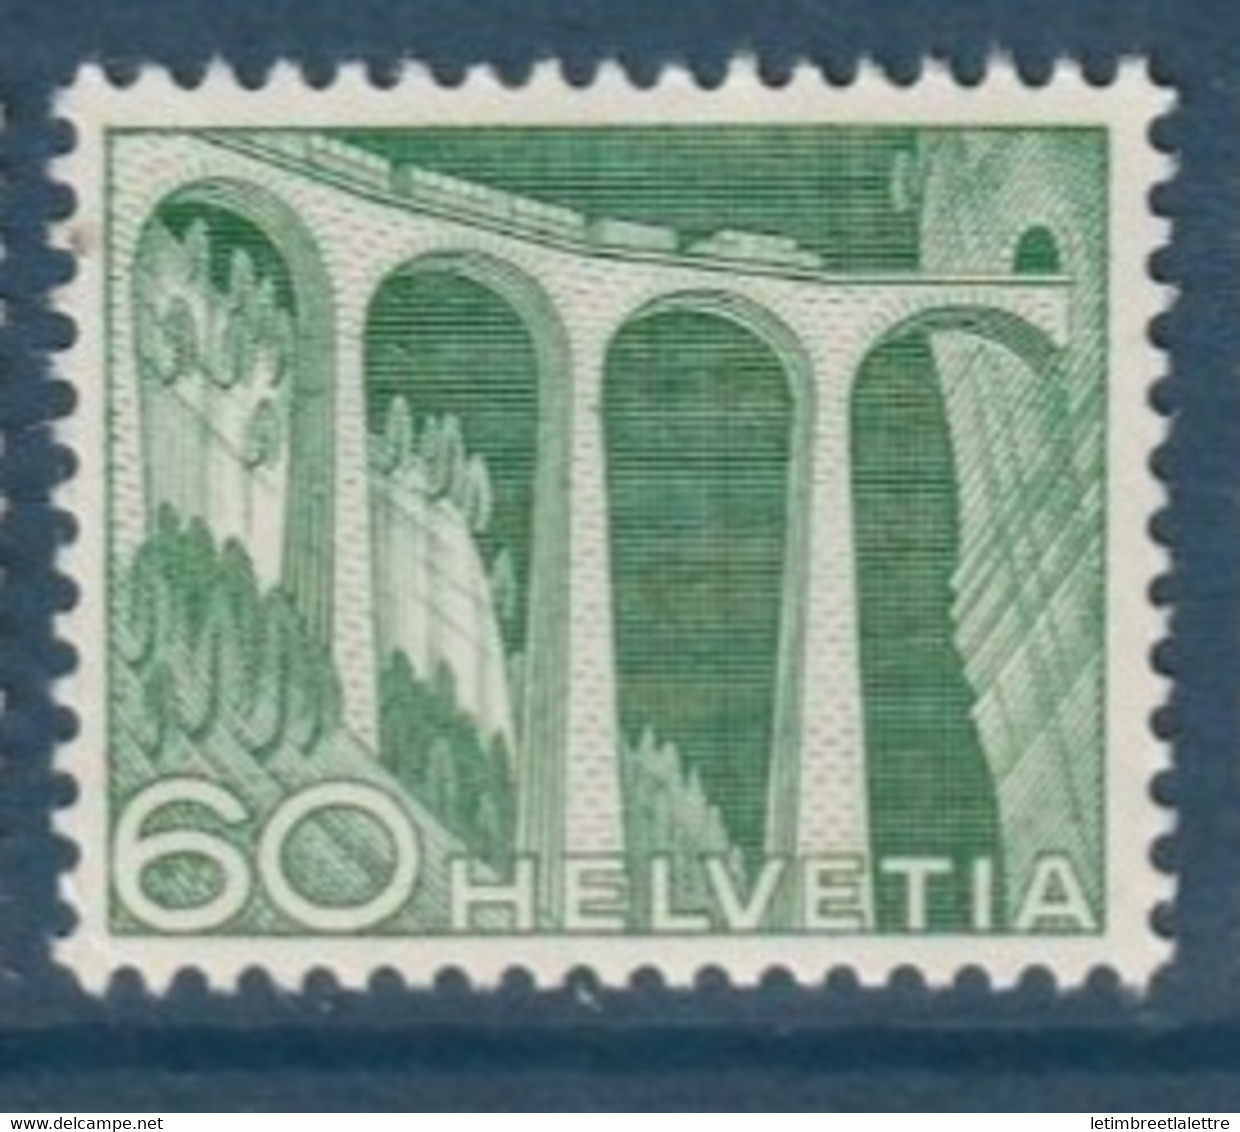 ⭐ Suisse - YT N° 491 * - Neuf Avec Charnière - 1949 ⭐ - Unused Stamps